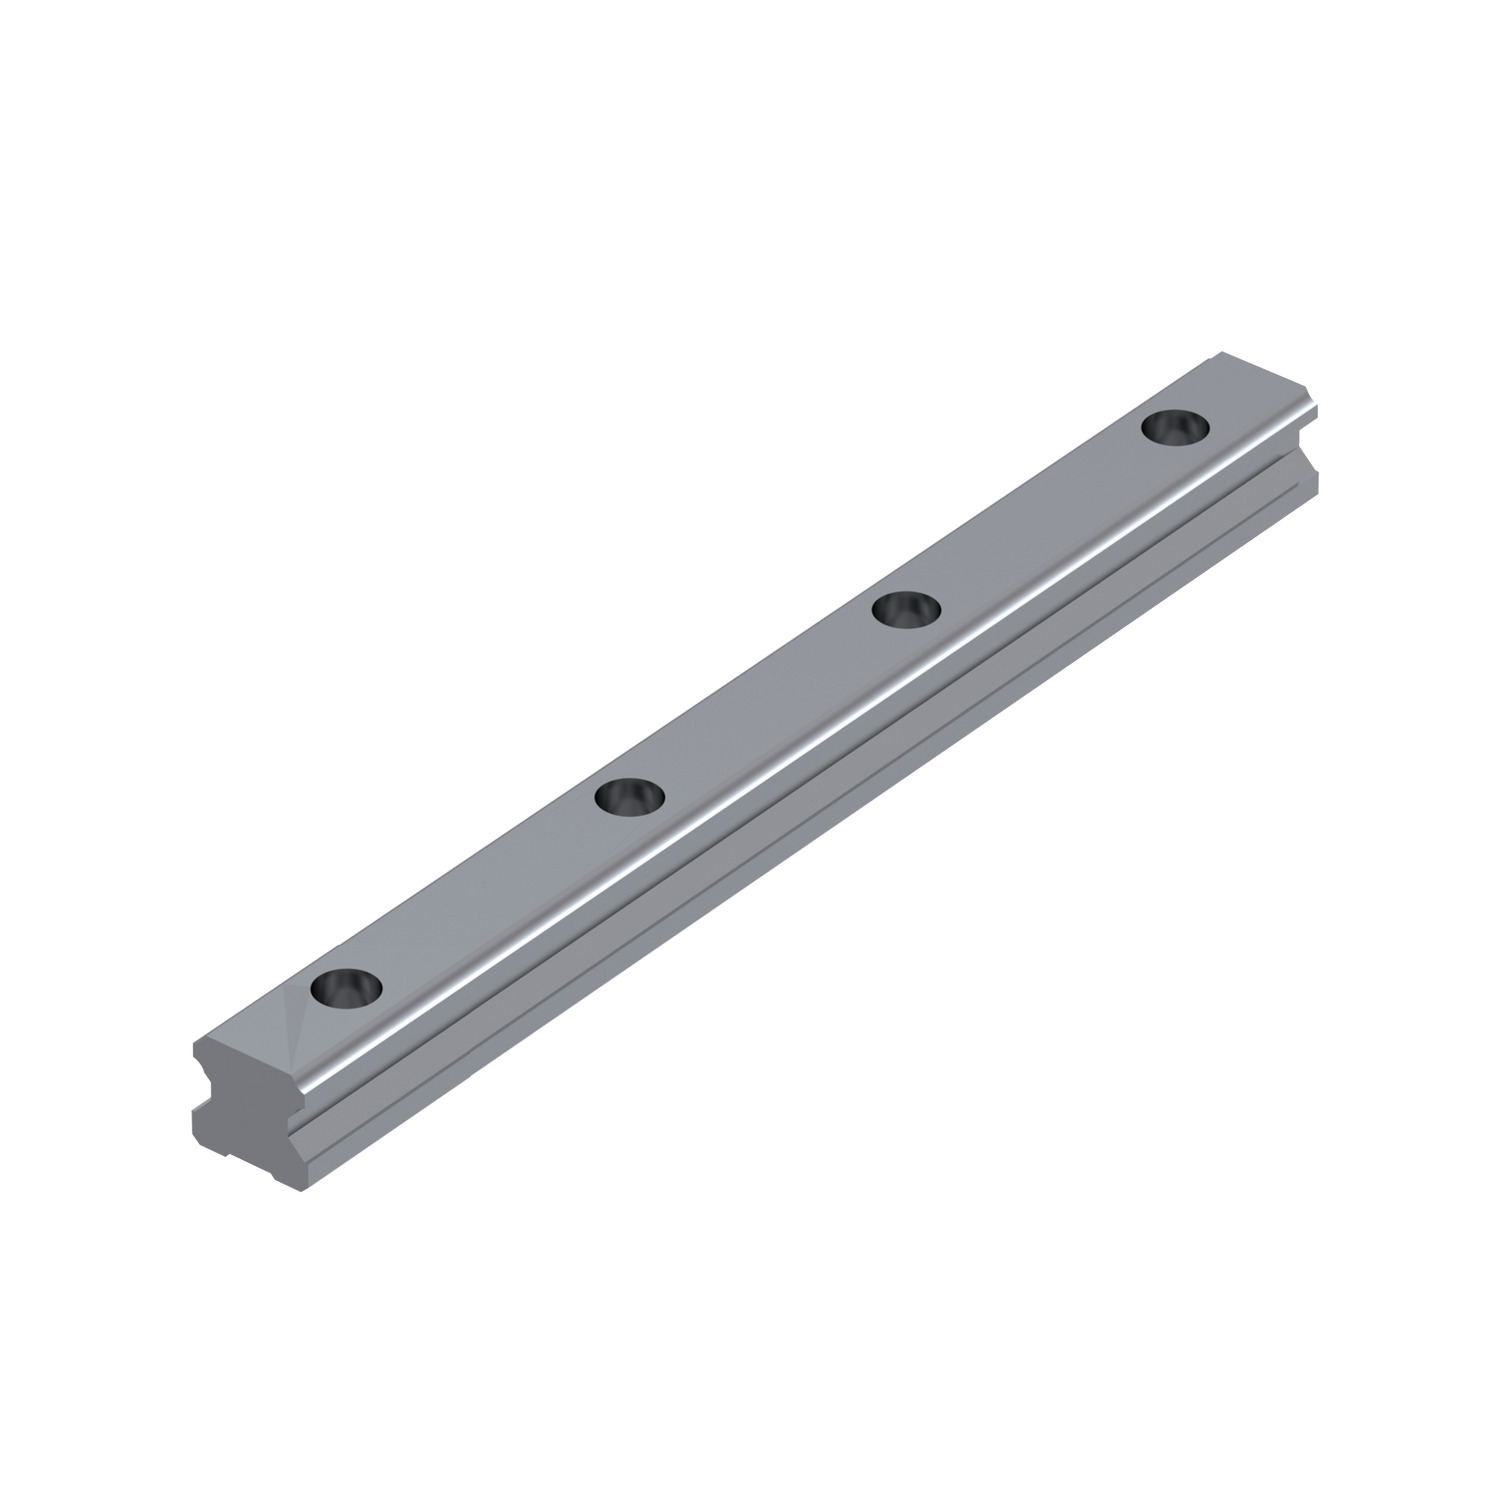 L1016.25 - 25mm Linear Guide Rail